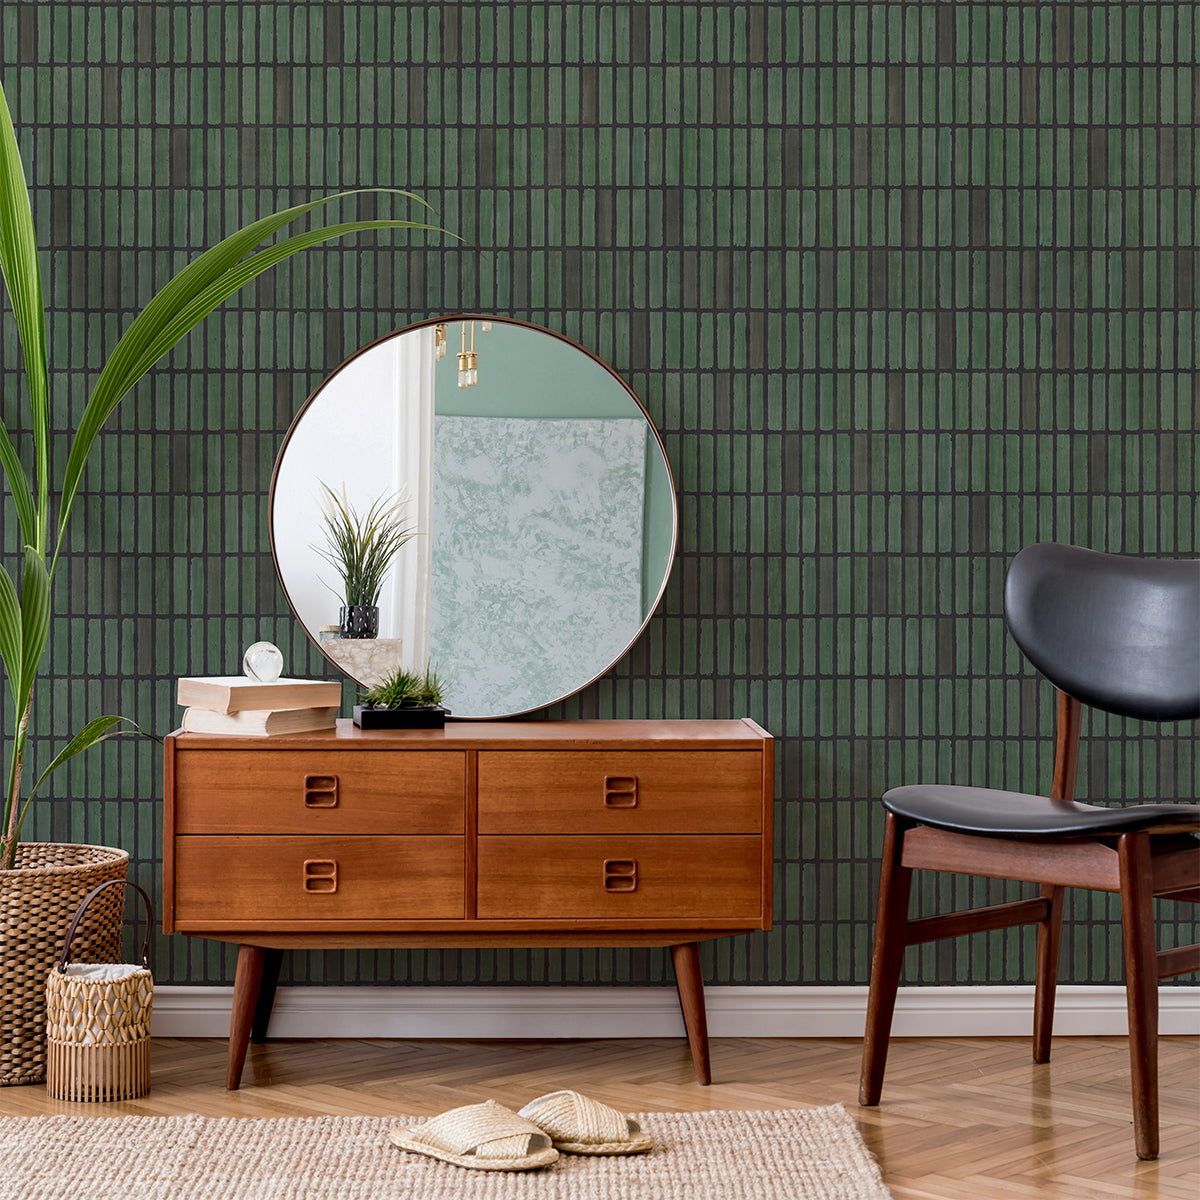 Terra Tessel, Pattern Wallpaper in Green, adorning a wall in a vanity room